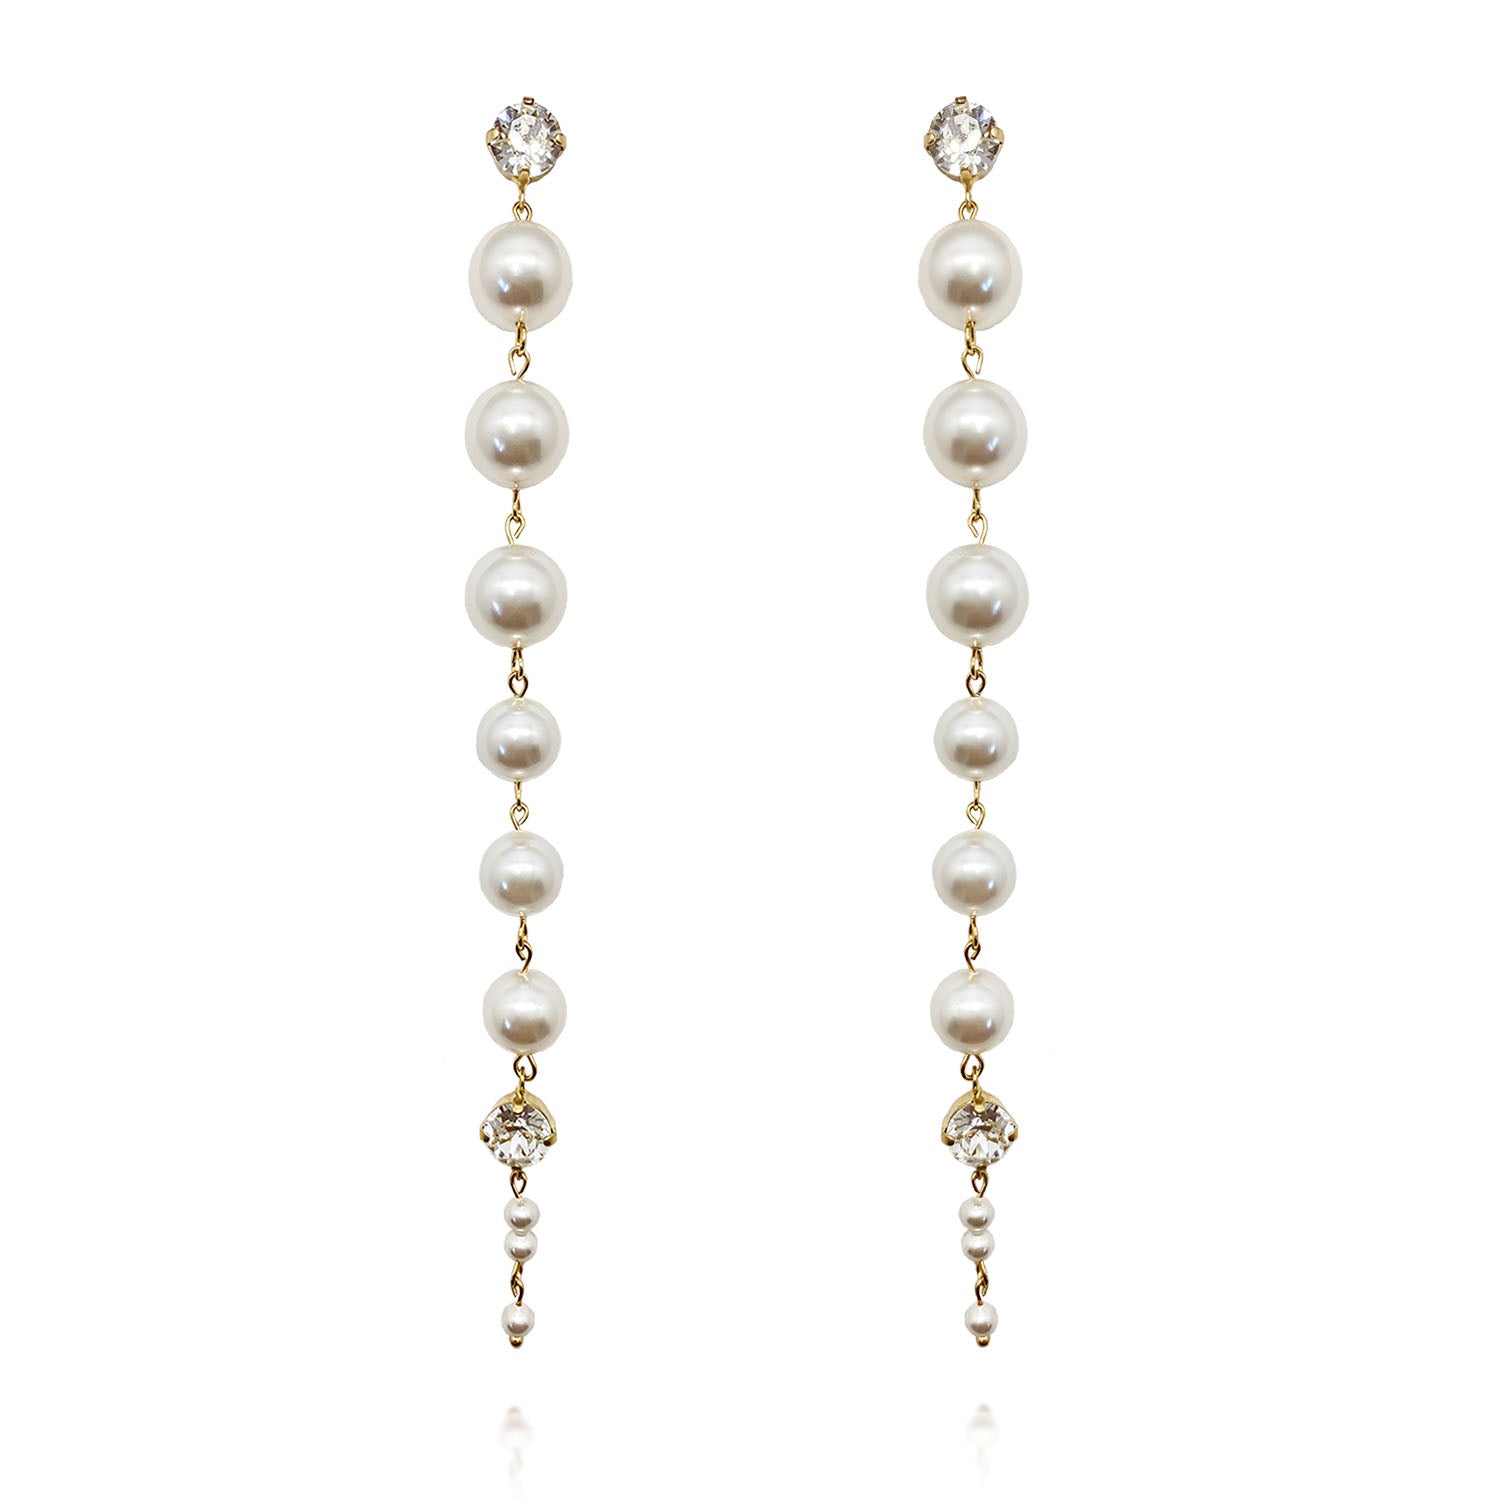 Nina earrings / Crystal clear